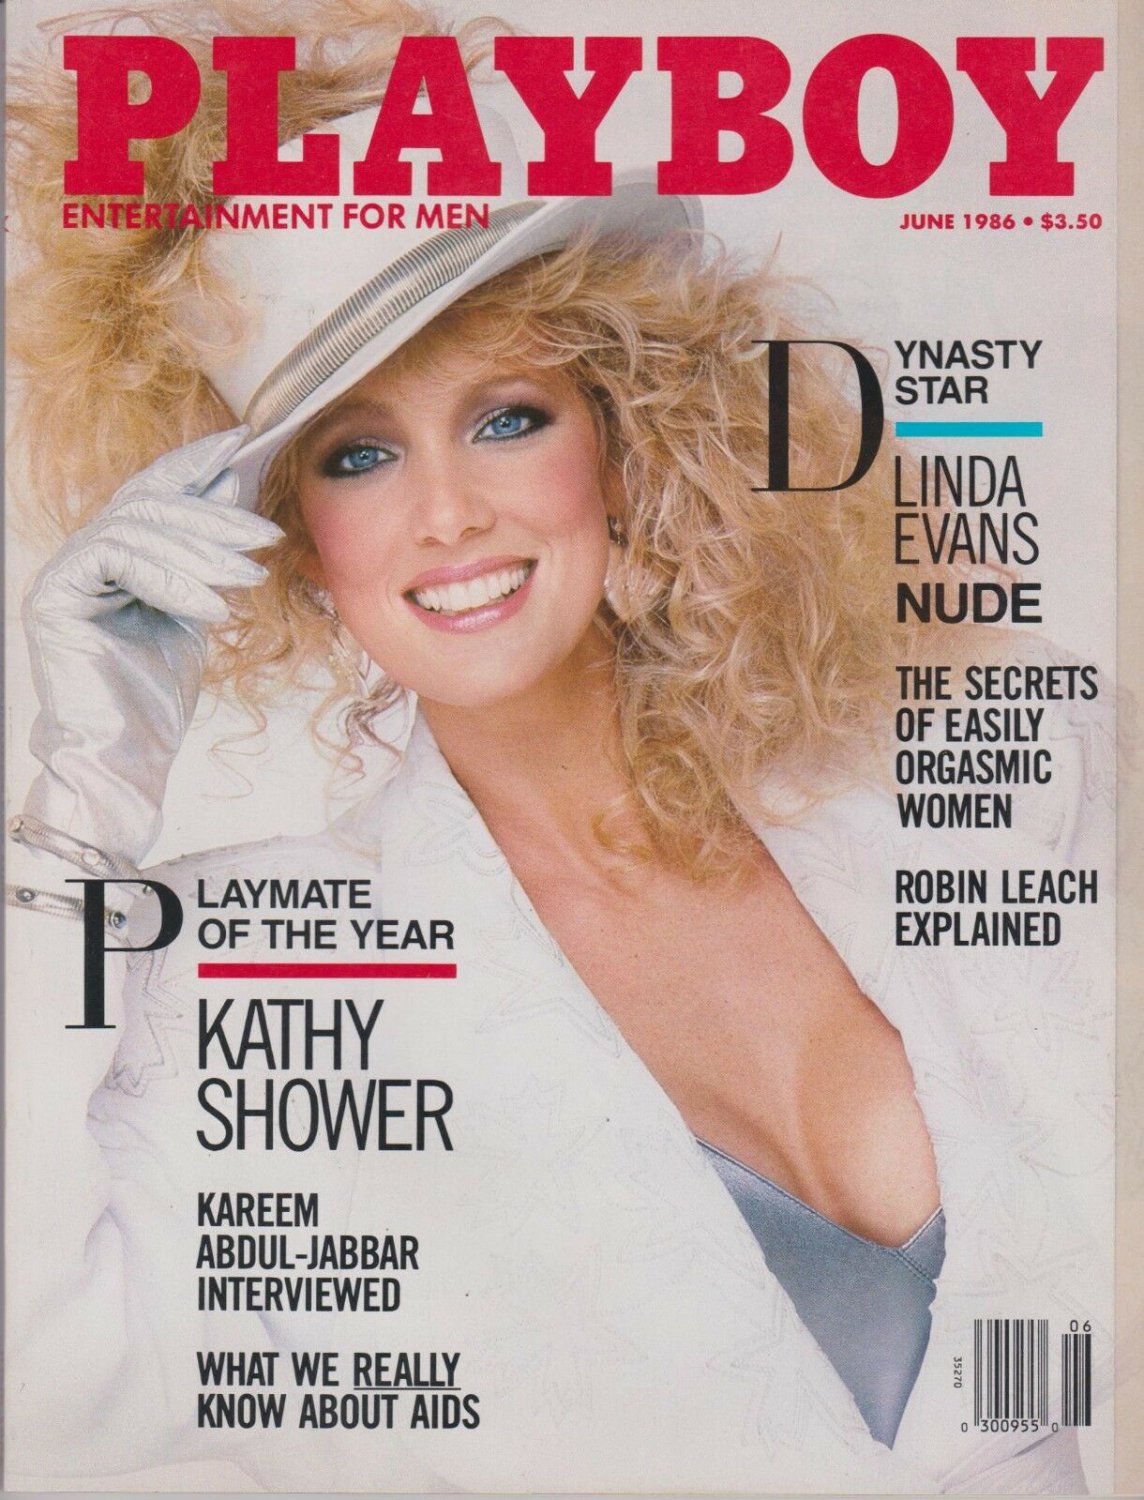 Playboy june 1986-A - pmoy kathy shower - linda evans nude.